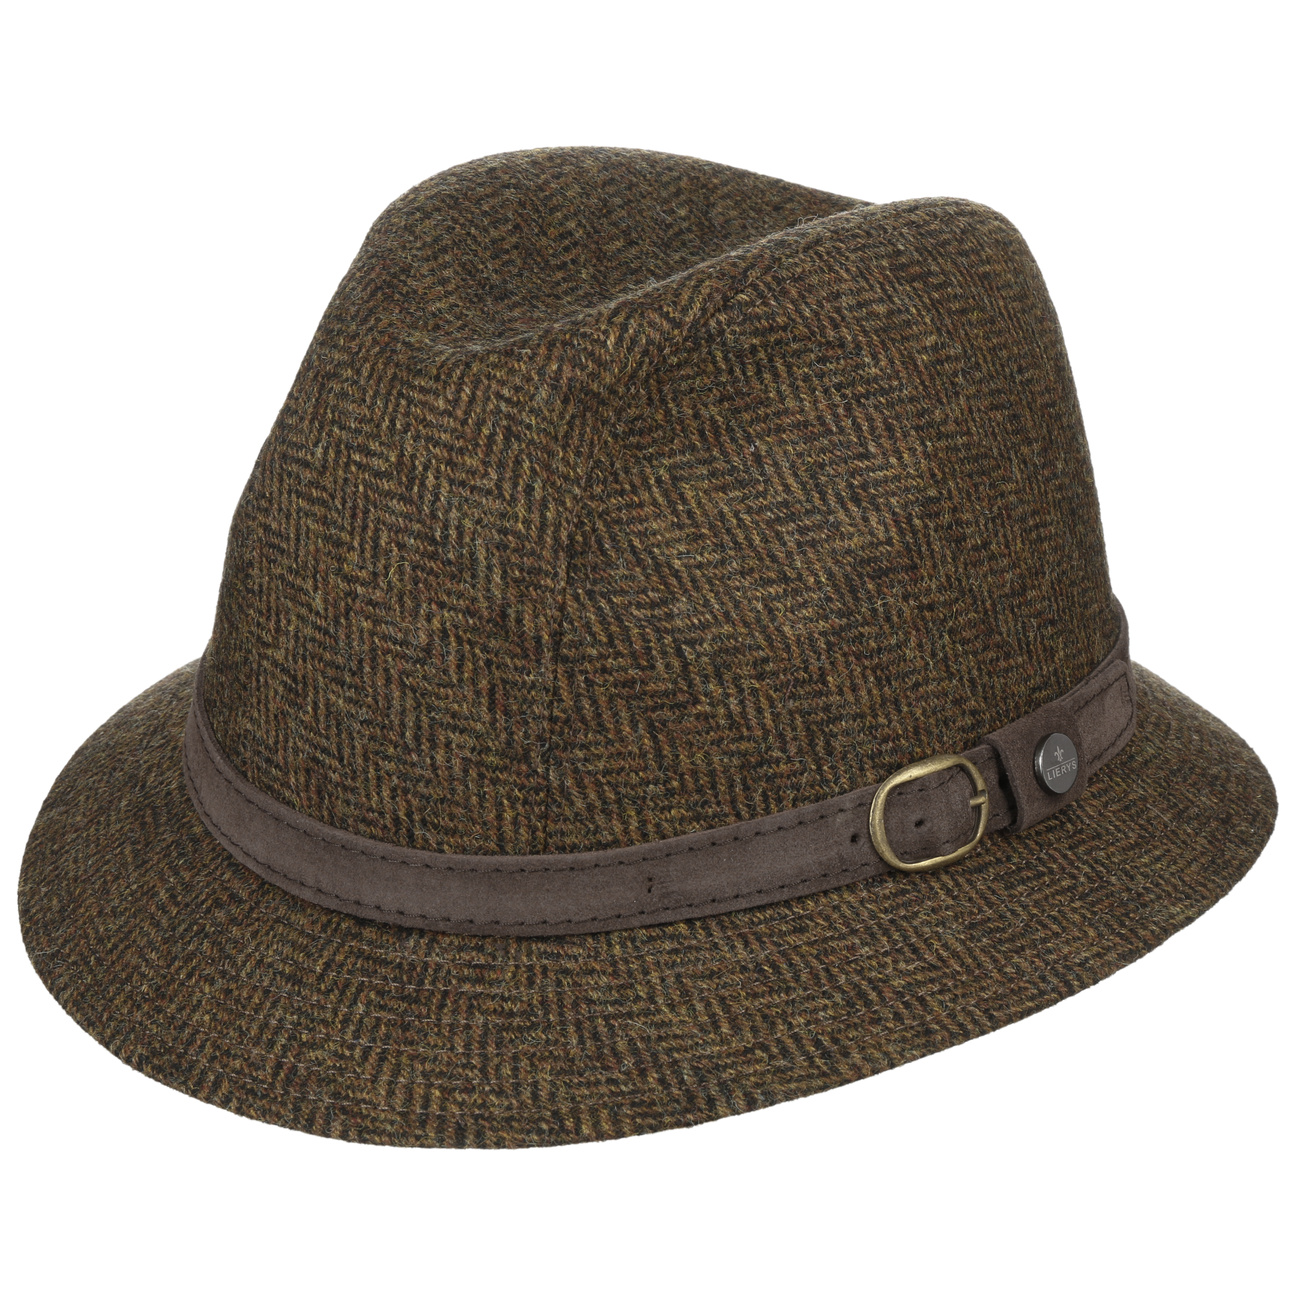 Classic Harris Tweed Wool Hat by Lierys -->